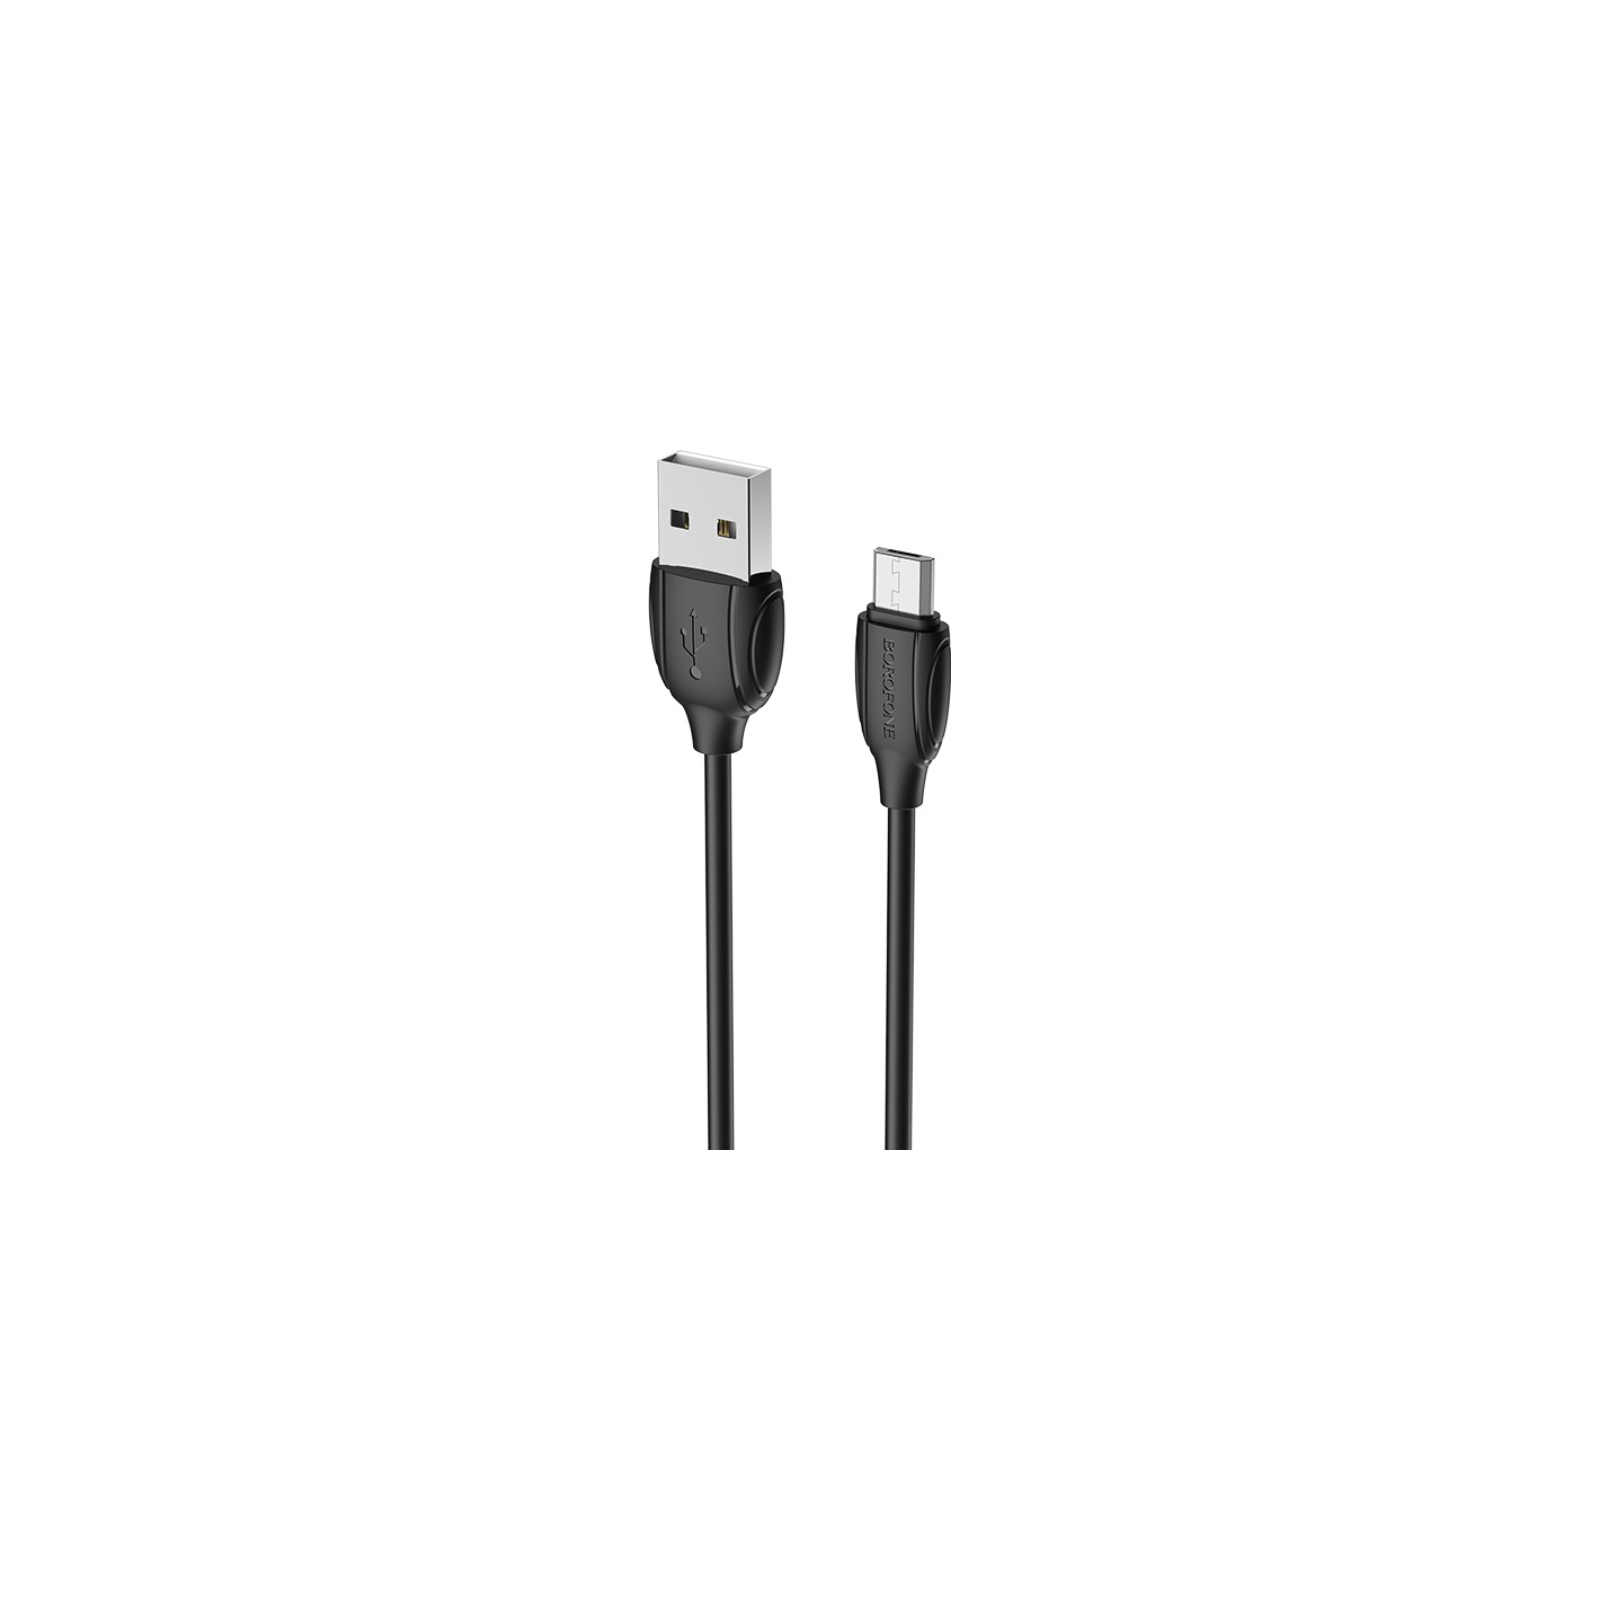 Дата кабель USB 2.0 AM to Micro 5P 1.0m BX19 Benefit 2.4A Black BOROFONE (BX19MB)